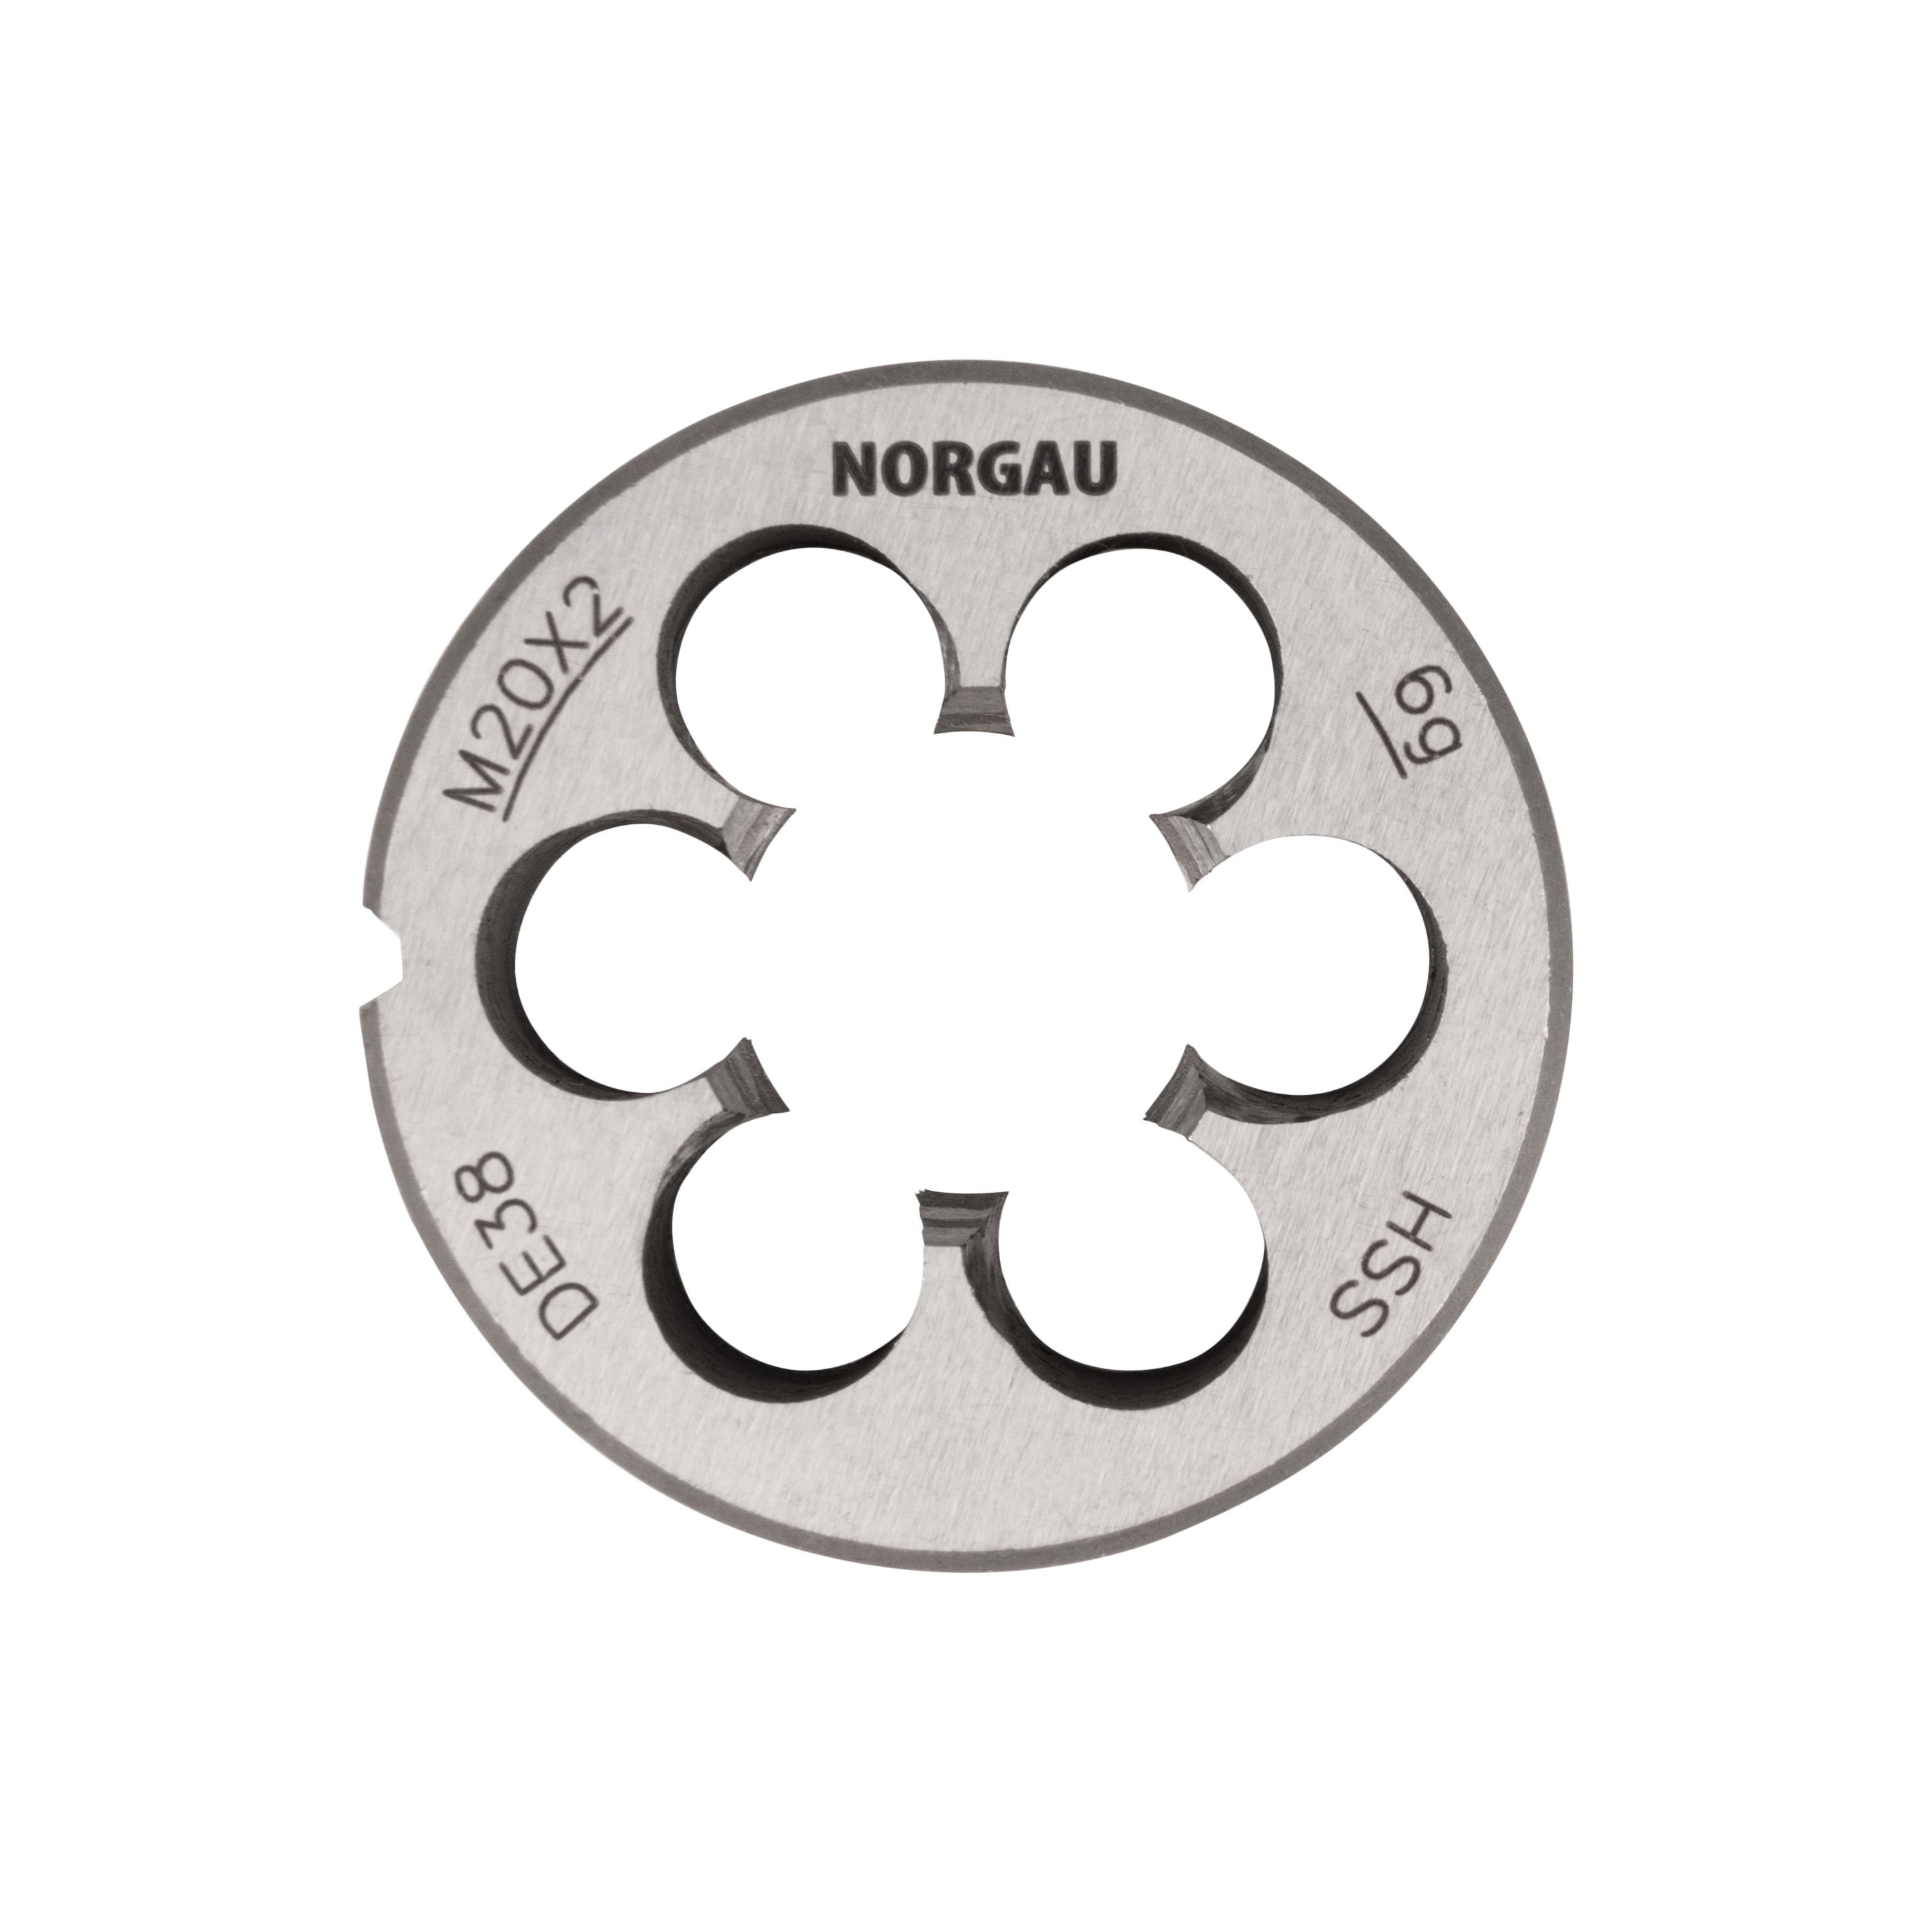 Плашка NORGAU Industrial М20х1.5х45 мм, метрическая, угол 60°, по DIN223, HSS плашка м18х2 5 мм norgau industrial метрическая угол 60° по din223 hss